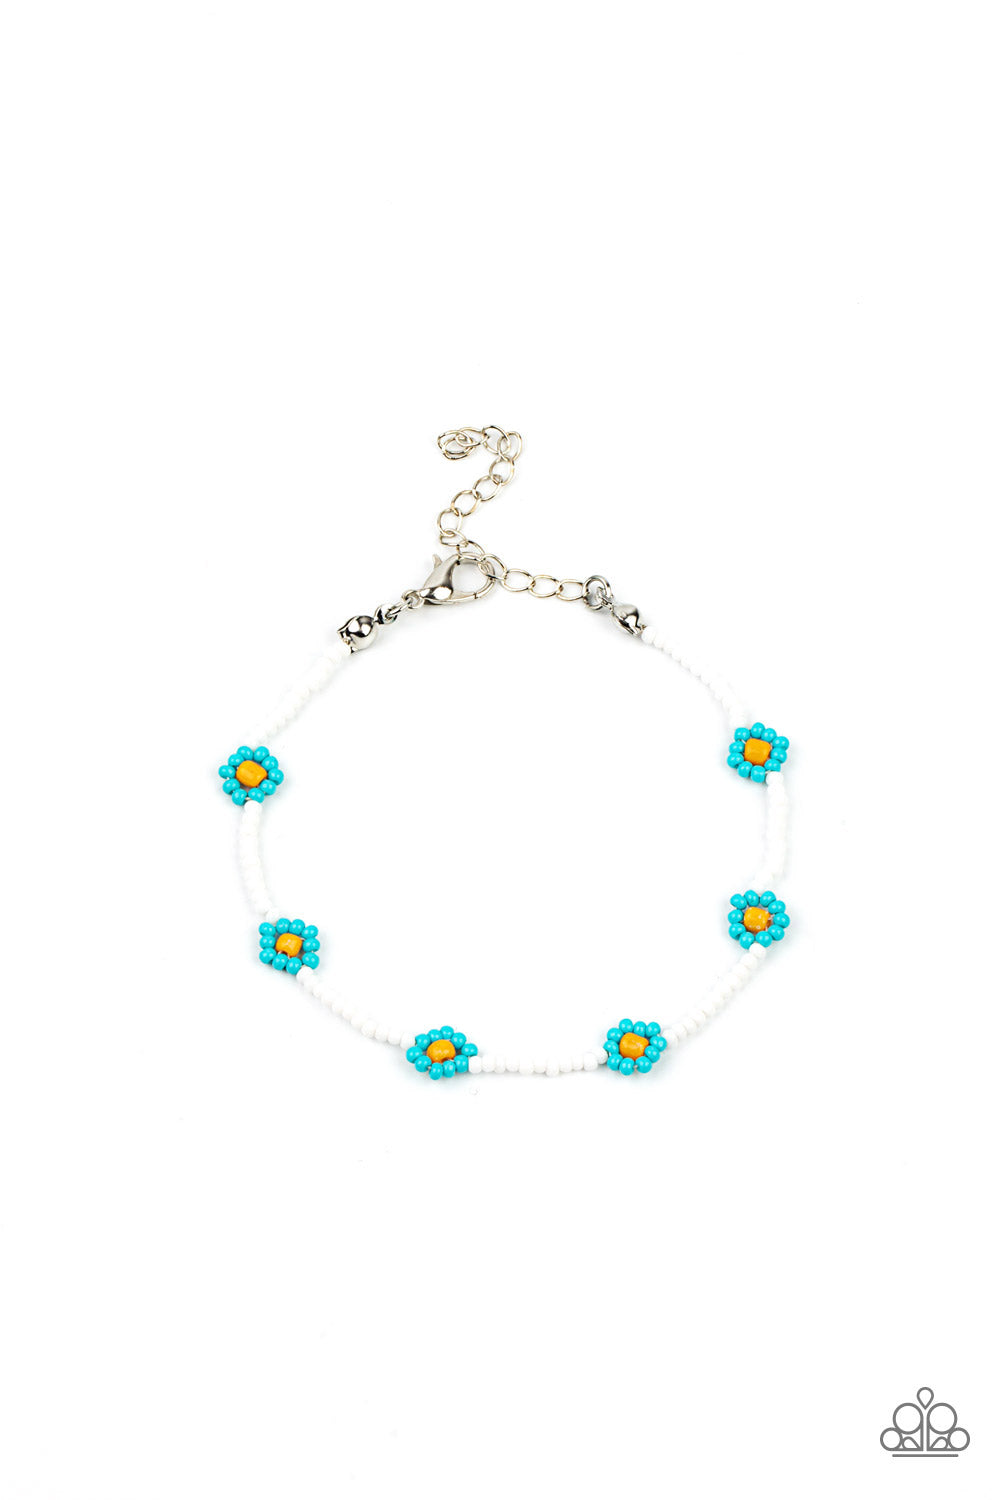 Paparazzi - Camp Flower Power - Blue Bracelet